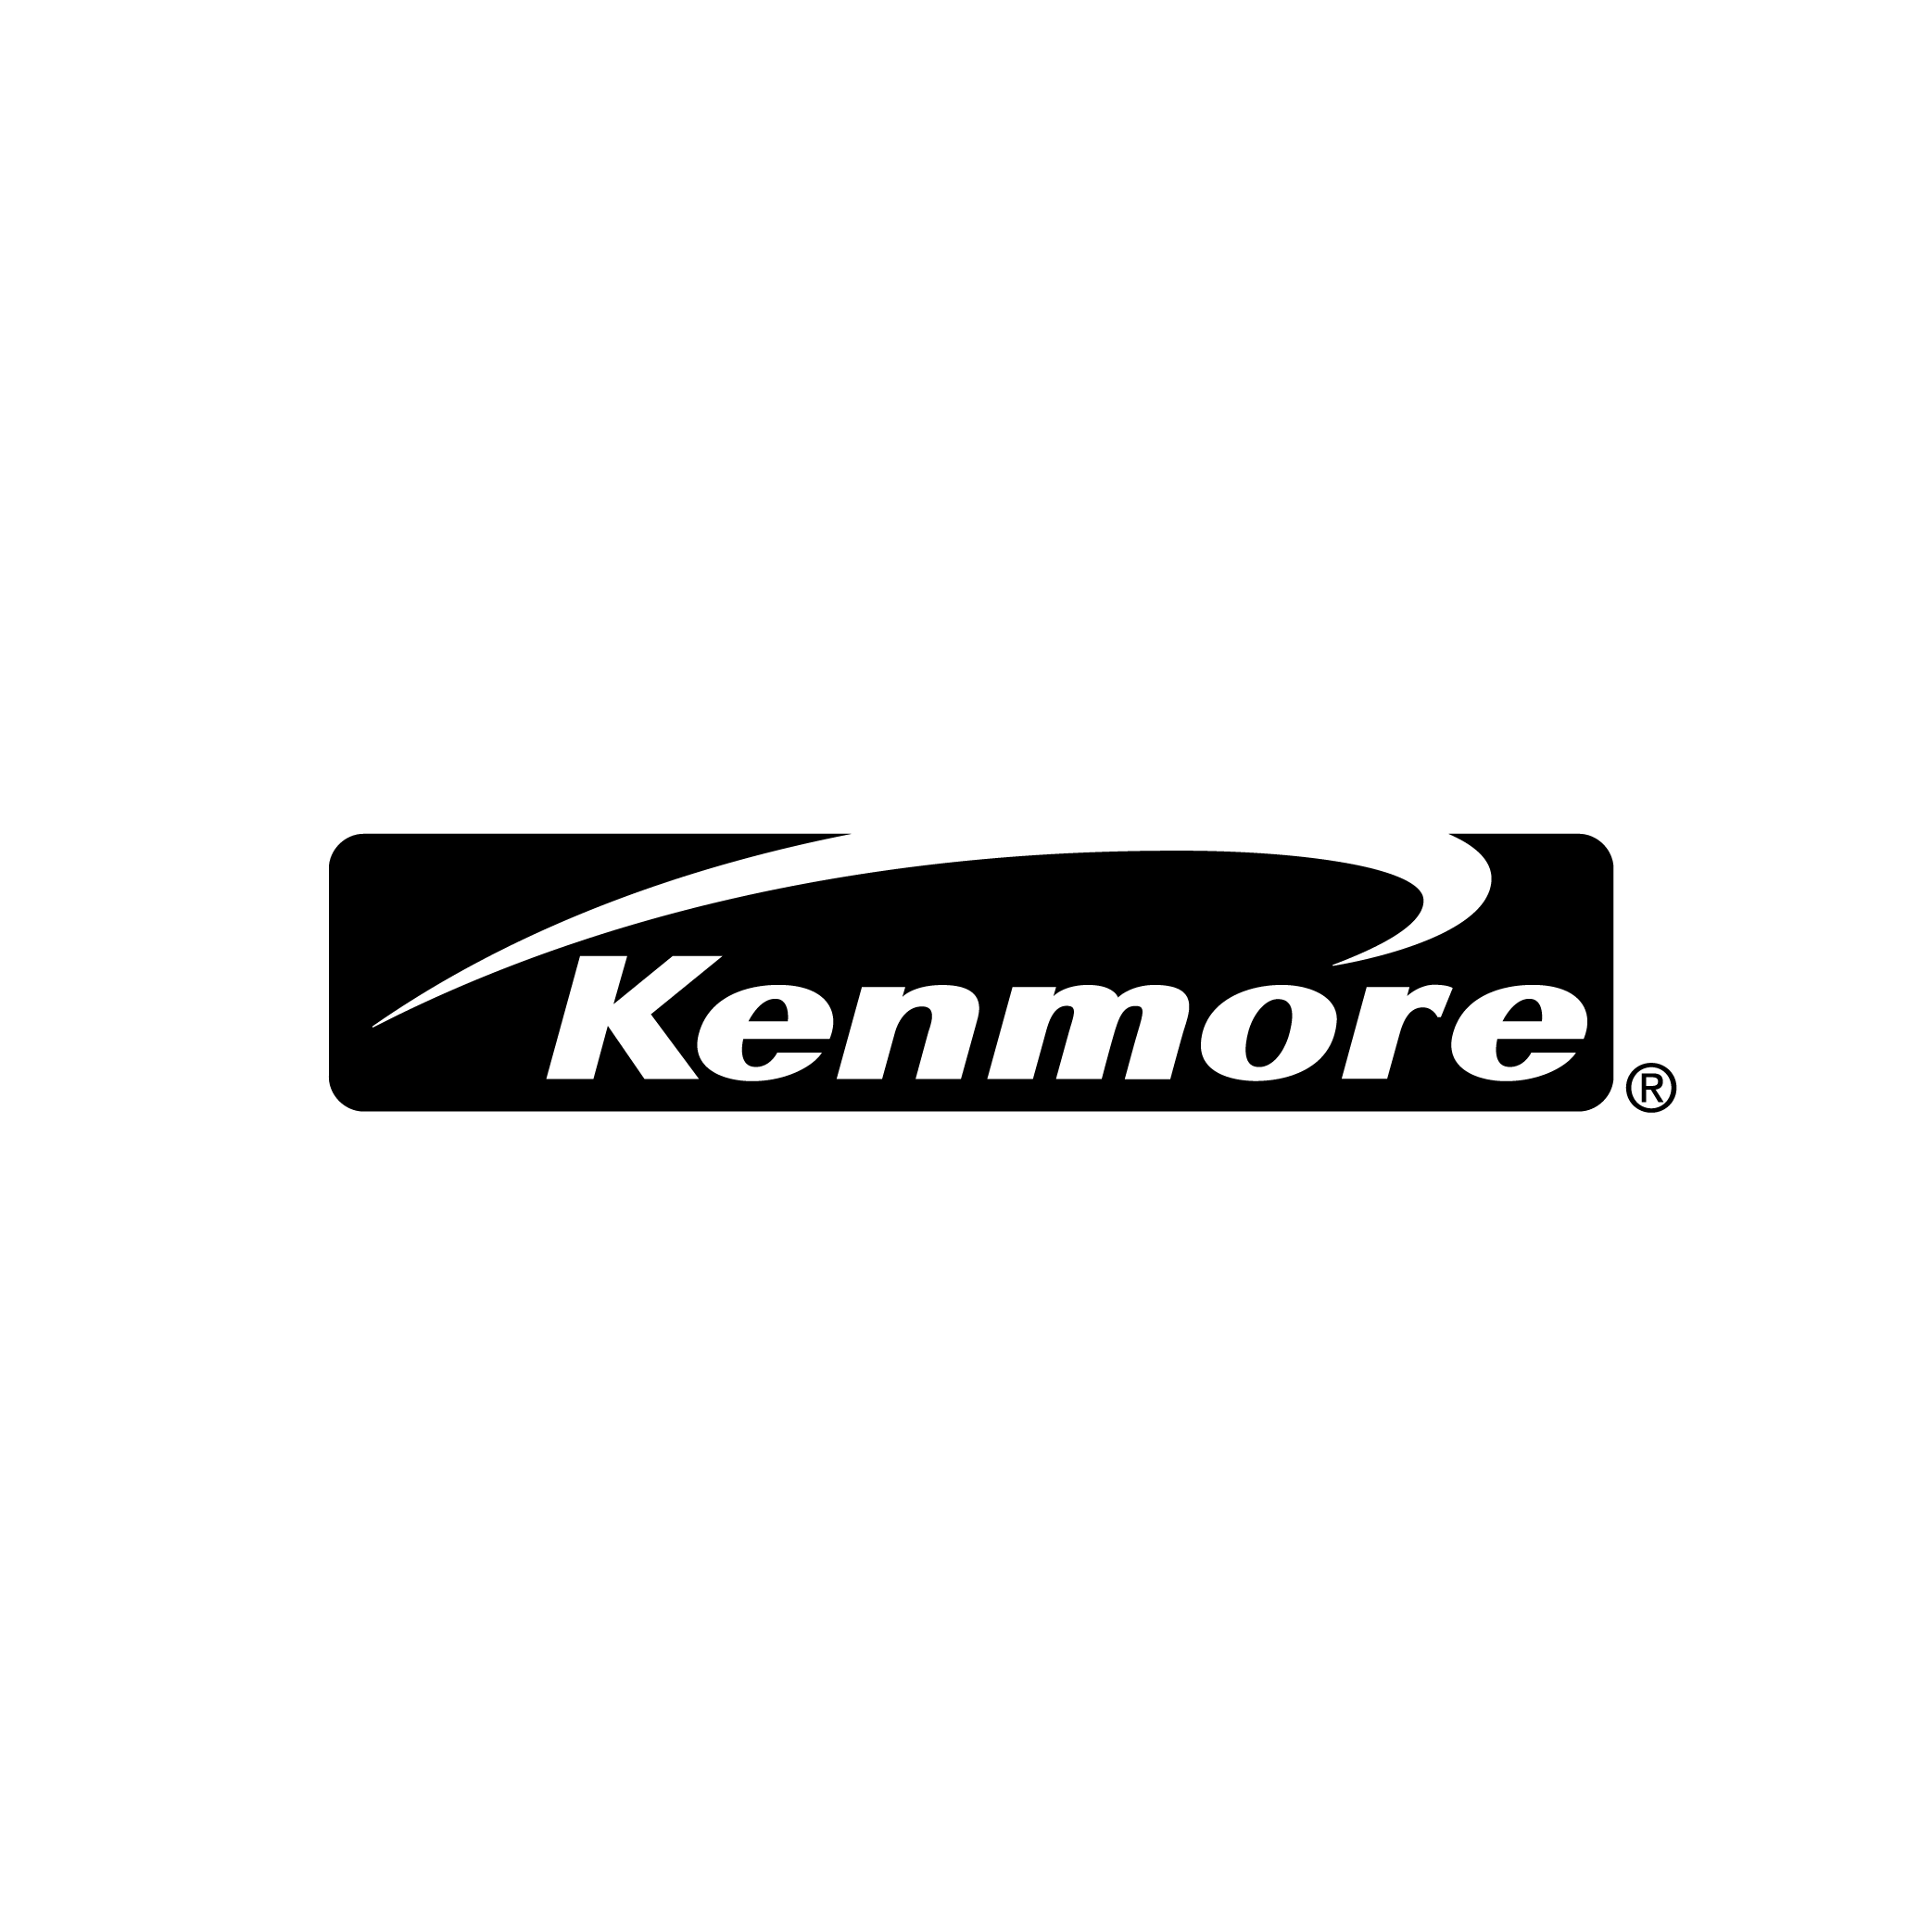  Kenmore Appliances Logo 